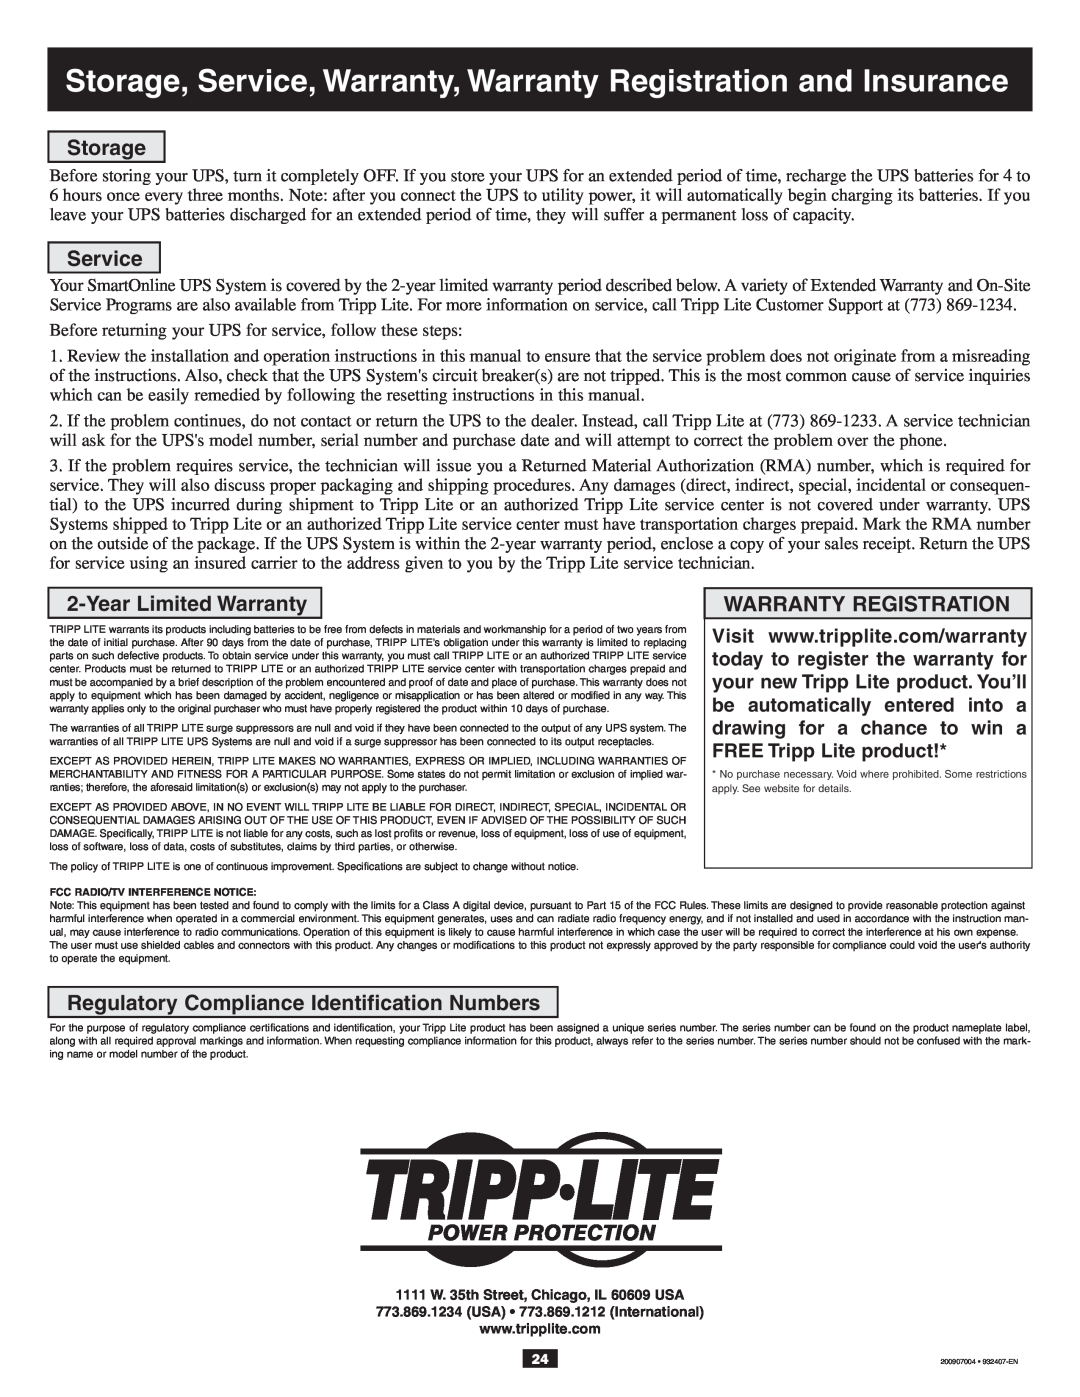 Tripp Lite 10KVA owner manual Storage, Service, Warranty, Warranty Registration and Insurance, Year Limited Warranty 